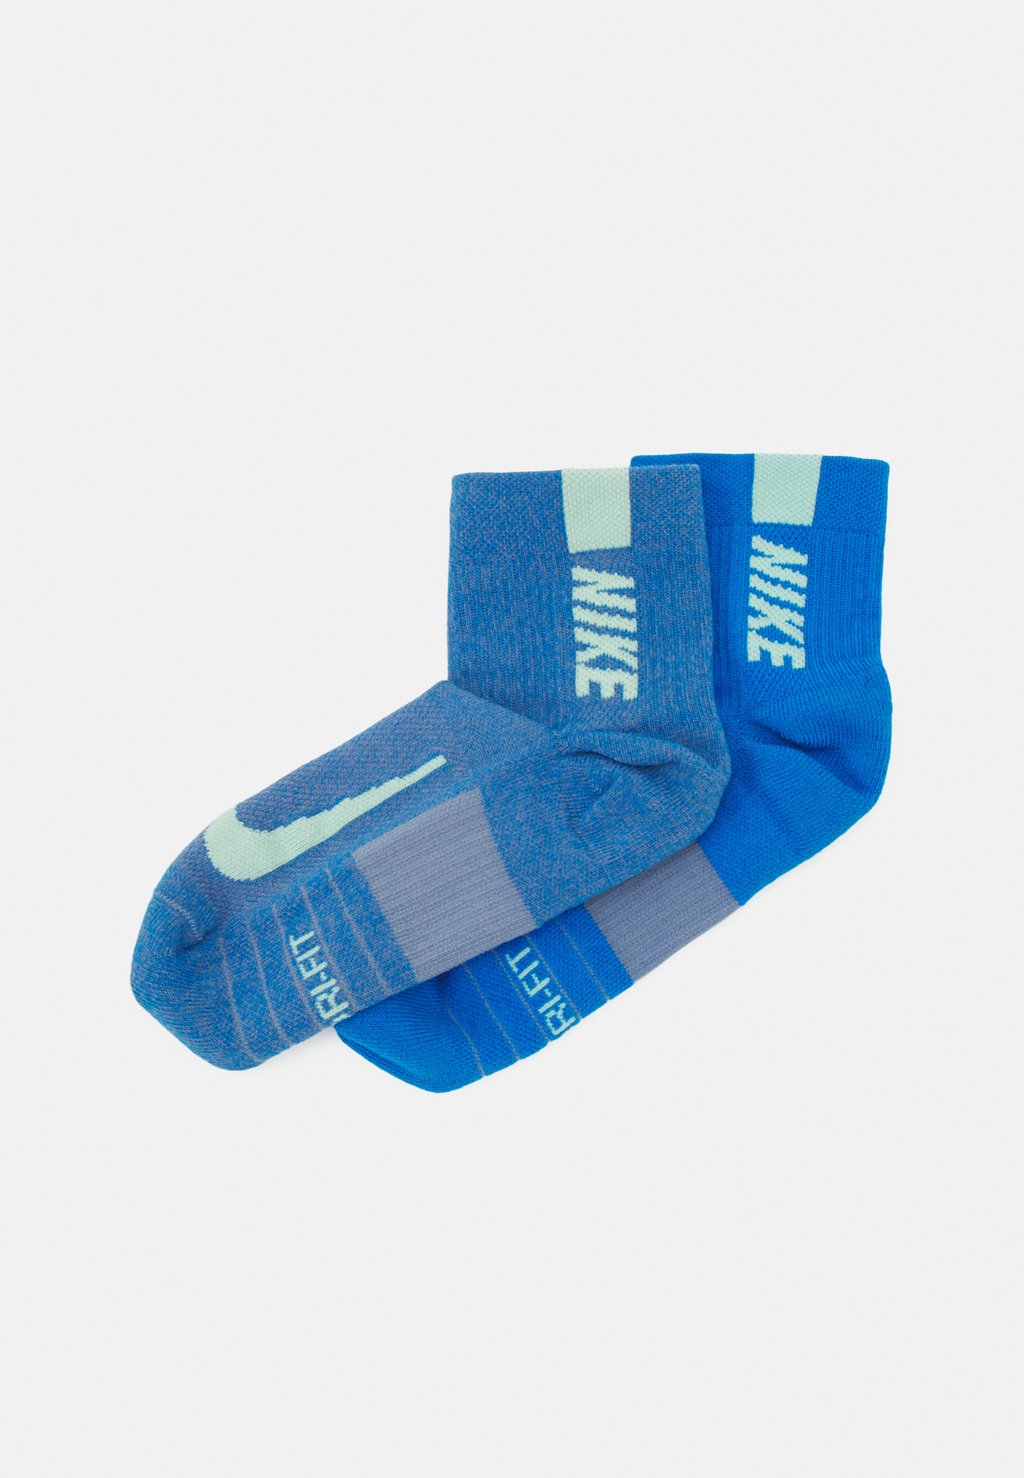 Спортивные носки Ankle Unisex 2 Pack Nike, цвет photo blue ashen slate(vapor green)/photo blue(vapor green) носки 2 пакета унисекс nike цвет photo blue ashen slate vapor green photo blue vapor green